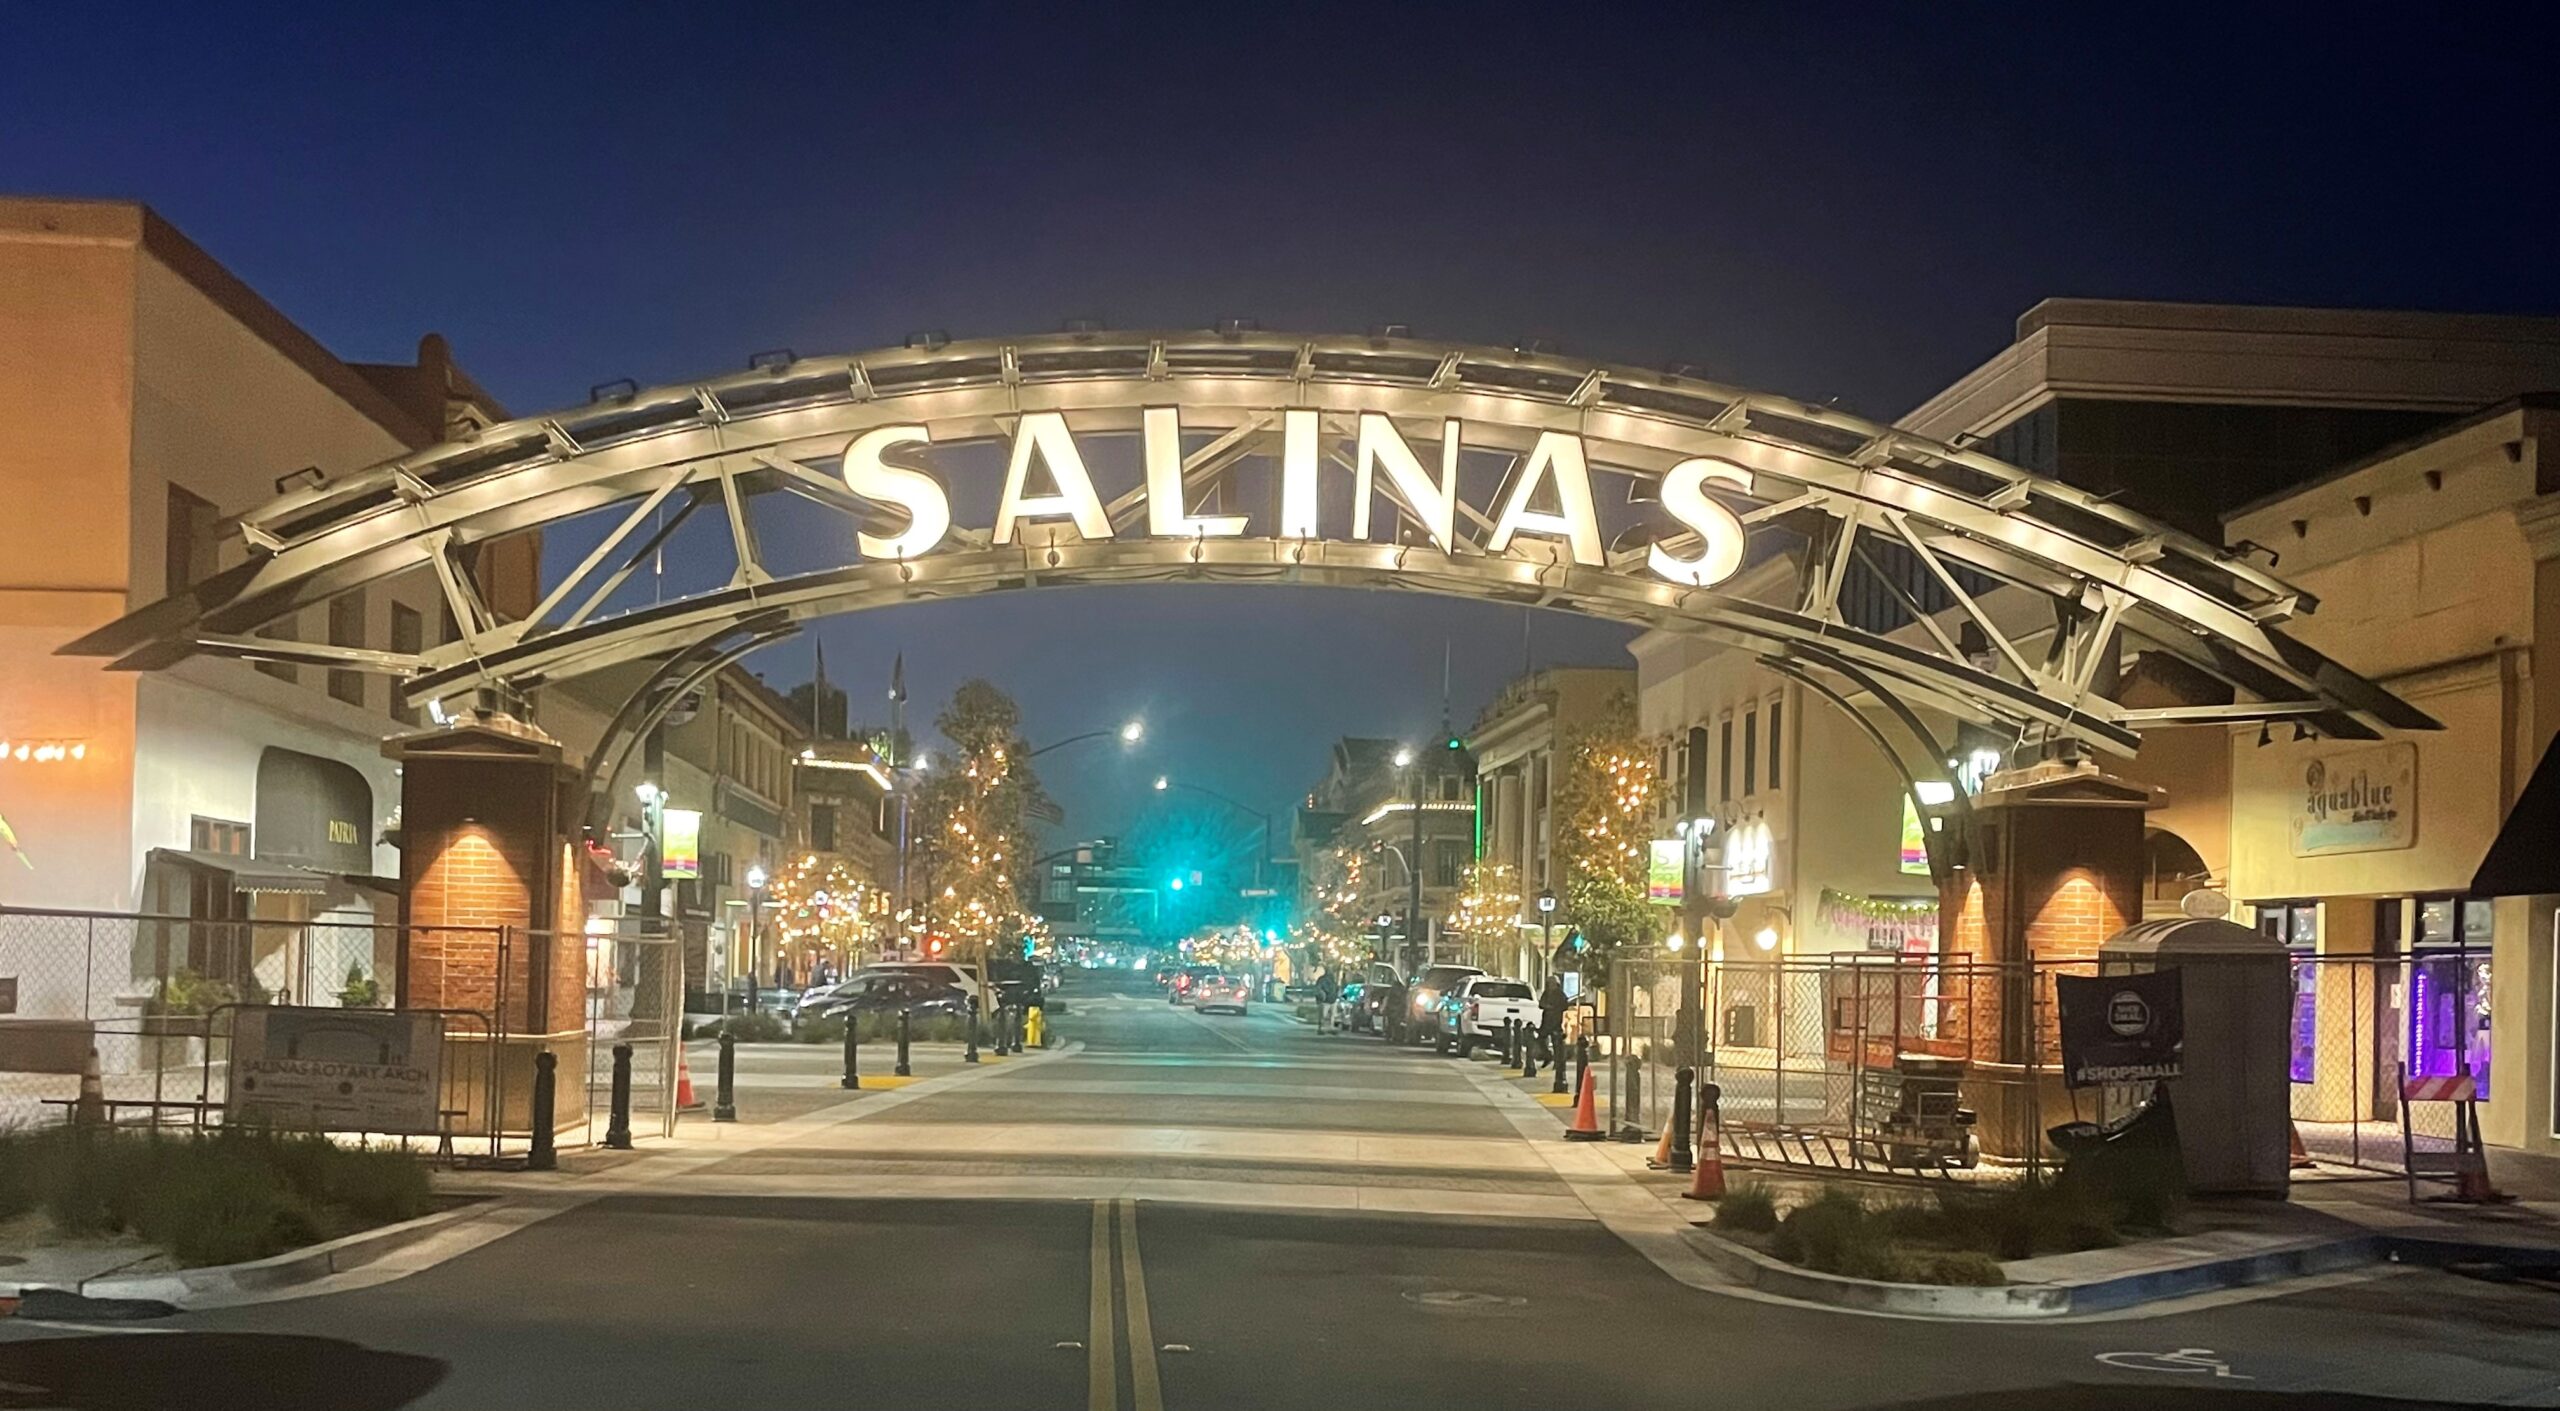 Salinas-Arch at night